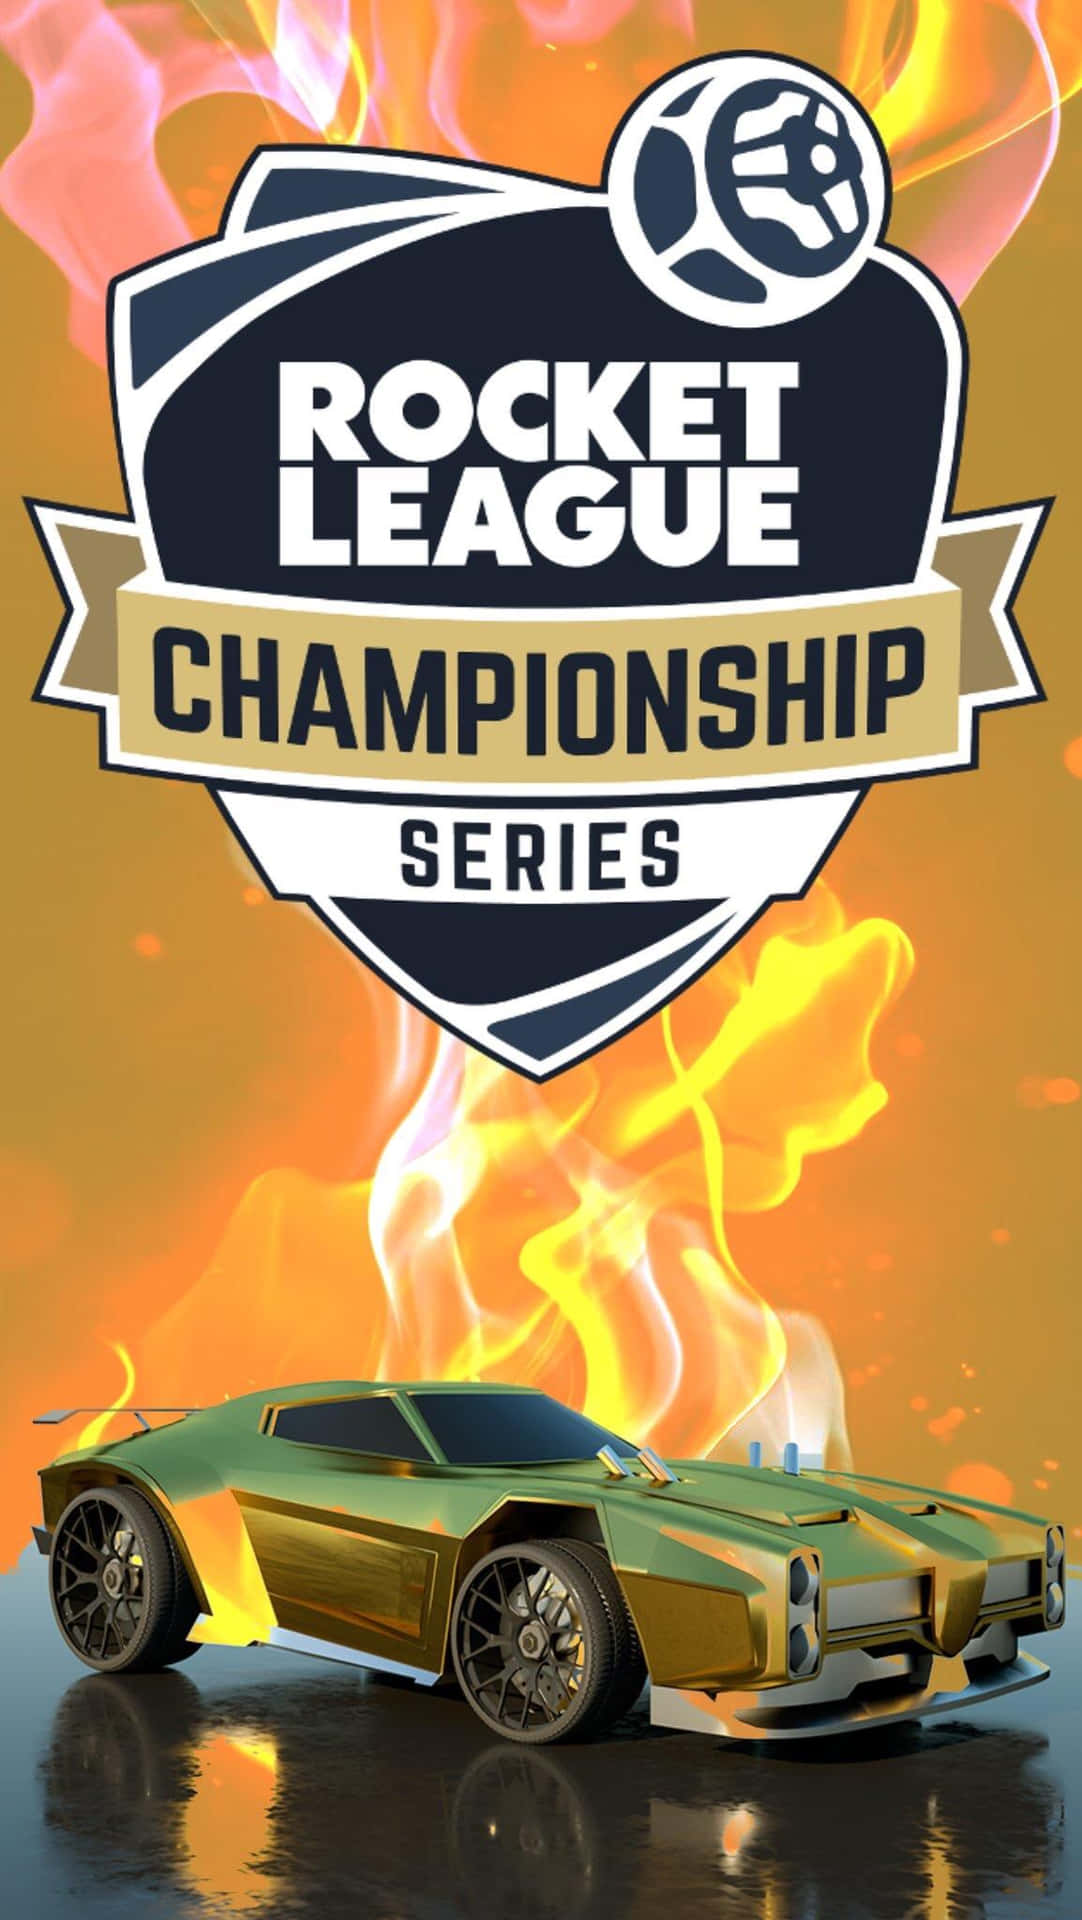 Rocketleague Championship Series - Rocket League Mästerskaps Serien.